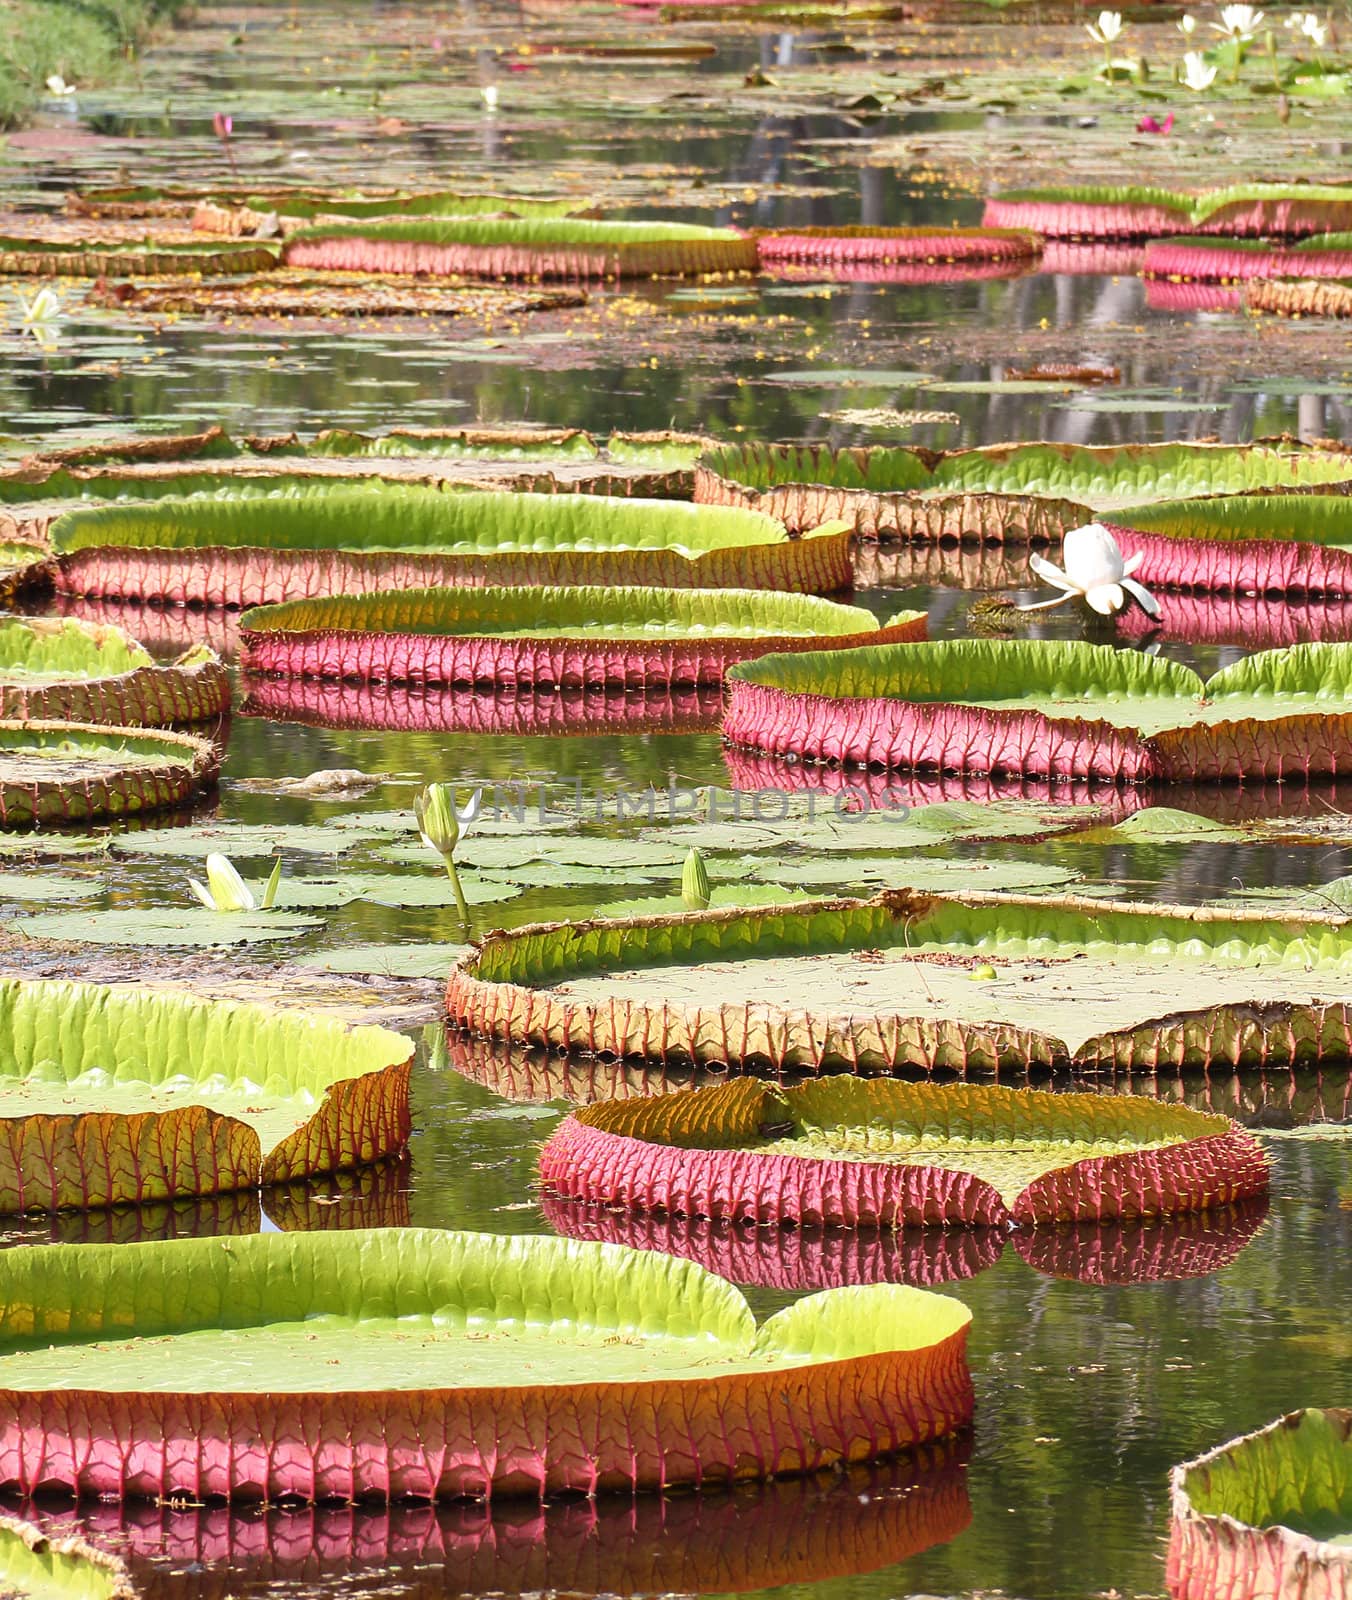 Victoria lotus leaf in a pond